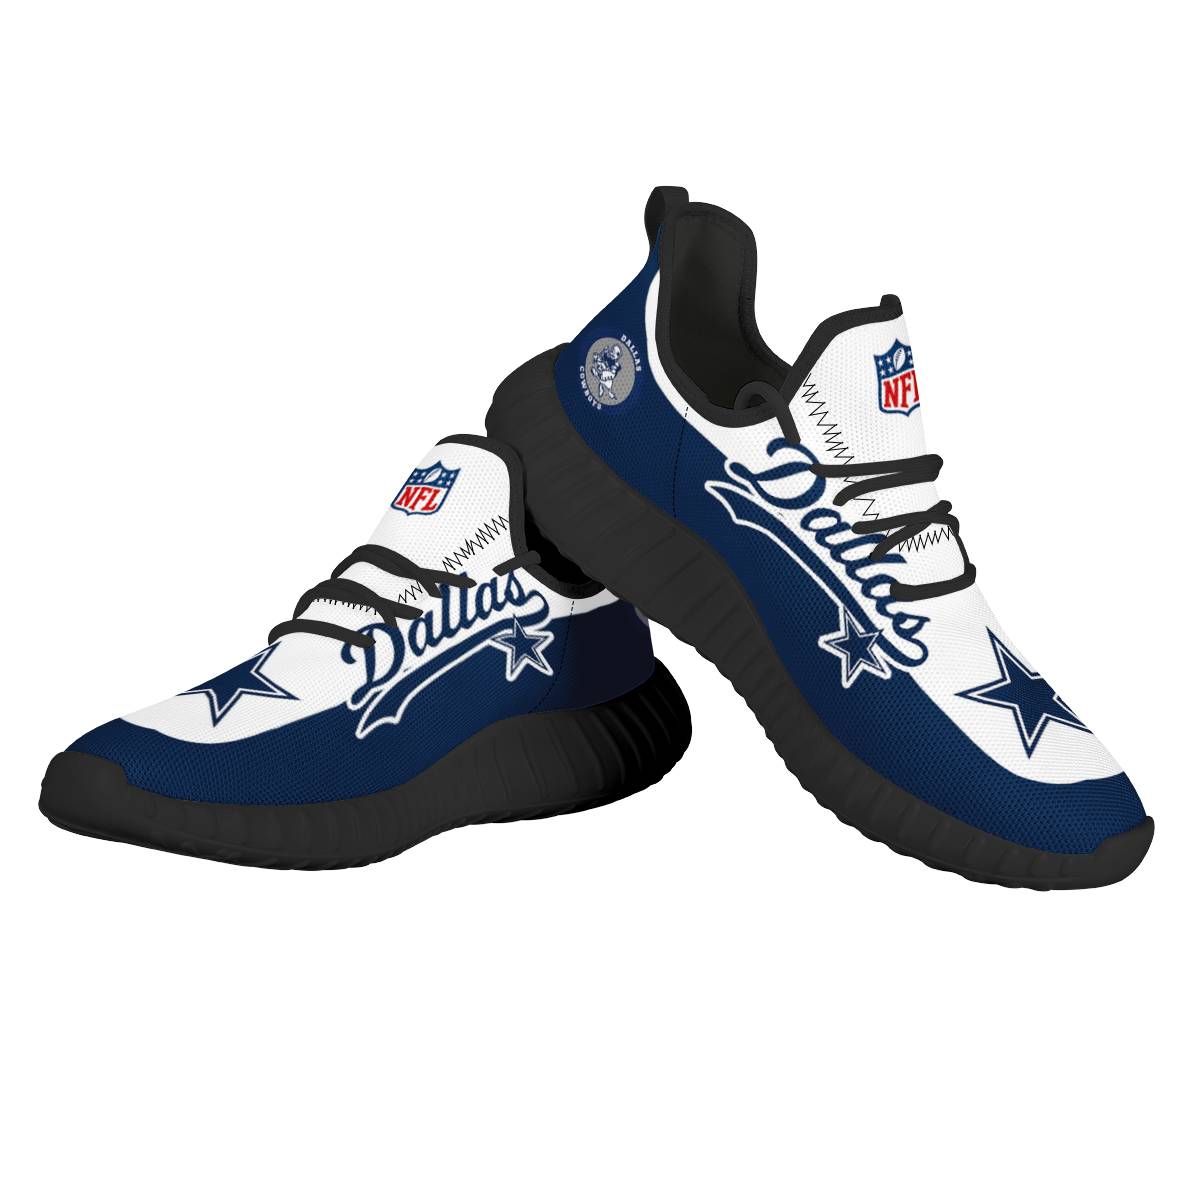 Men's NFL Dallas Cowboys Lightweight Running Shoes 007